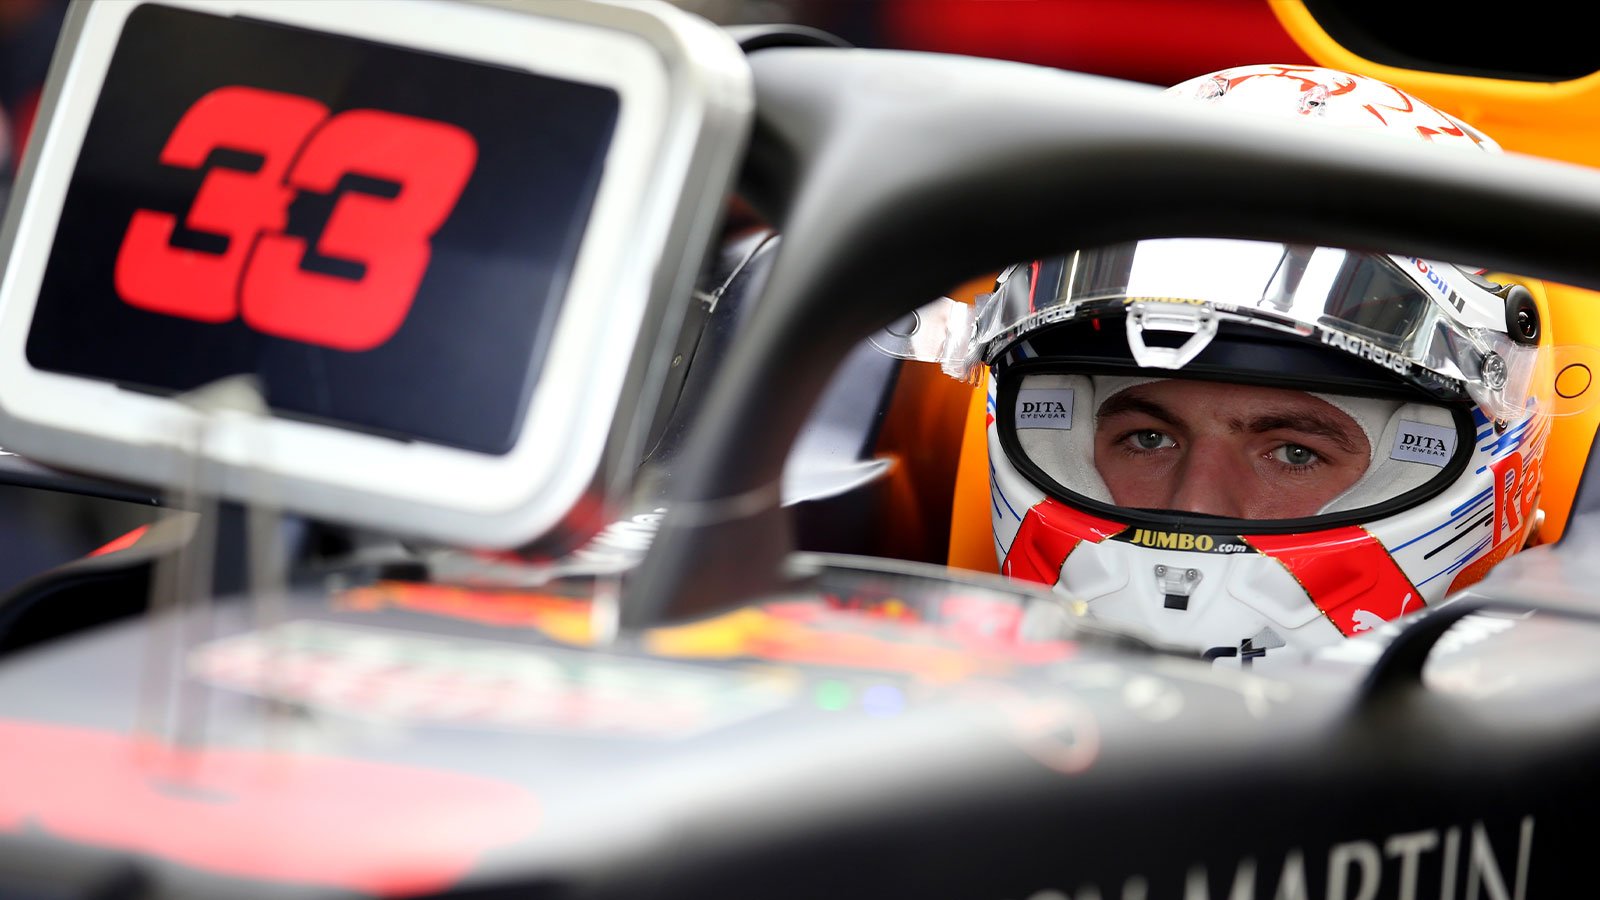 Макс Верстаппен выиграл поул к Гран-при Мексики 2019 года, Квят — девятый